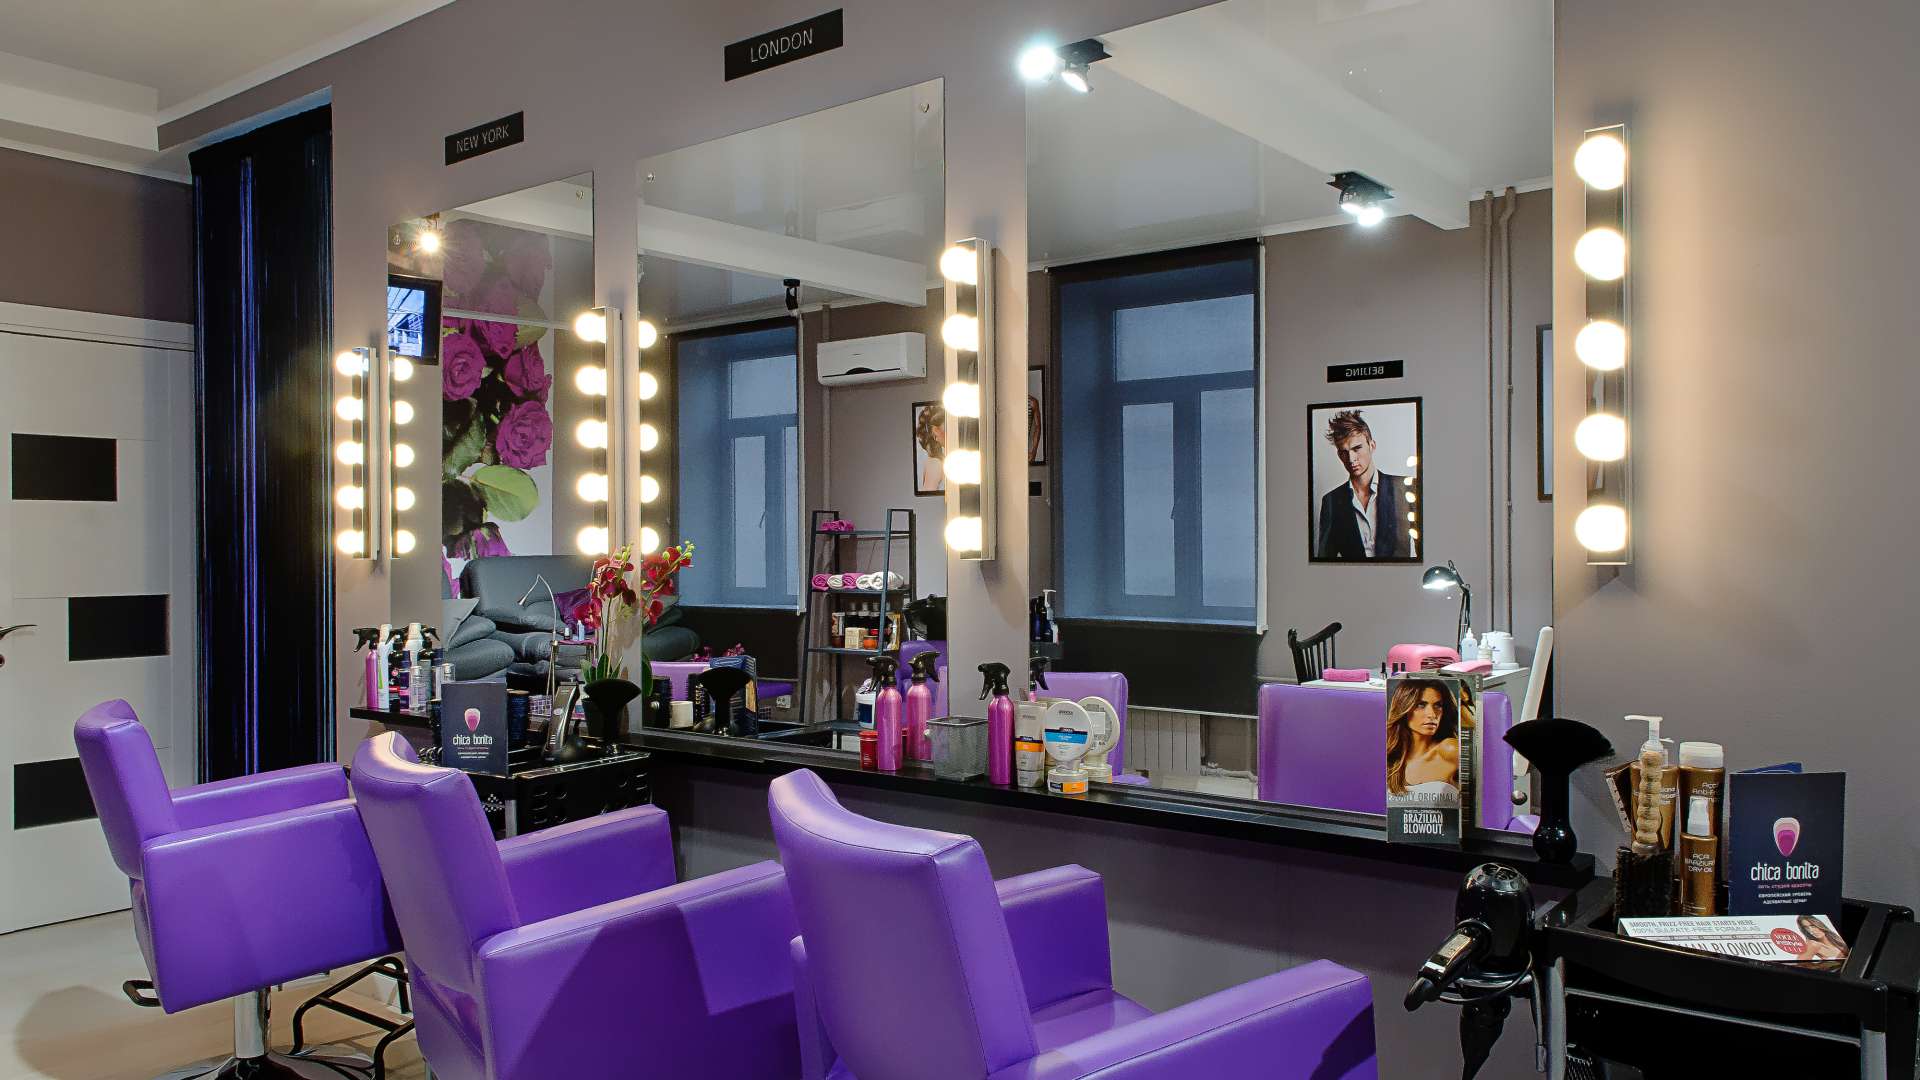 11 Salon de belleza moderno con muebles de color violeta intenso